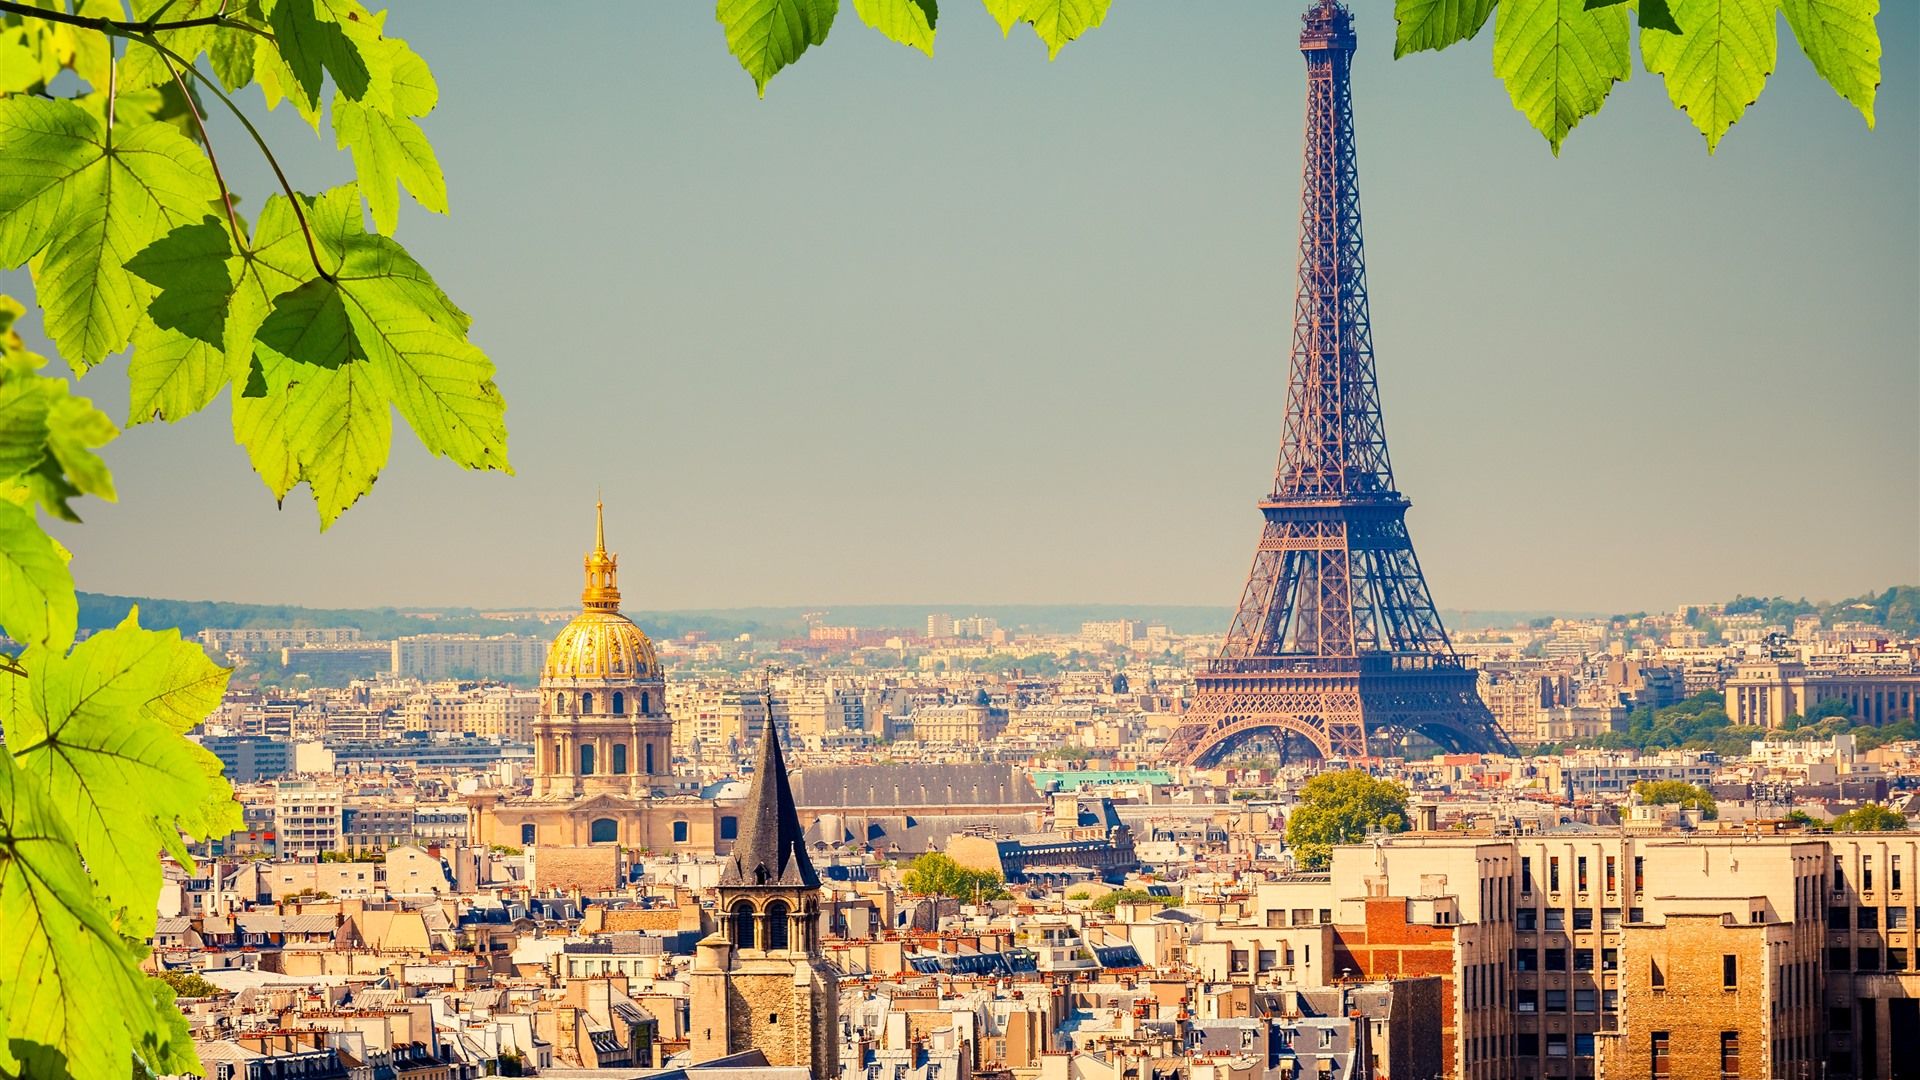 Wallpaper Eiffel Tower, city, green leaves, Paris, France 3840x2160 UHD 4K Picture, Image